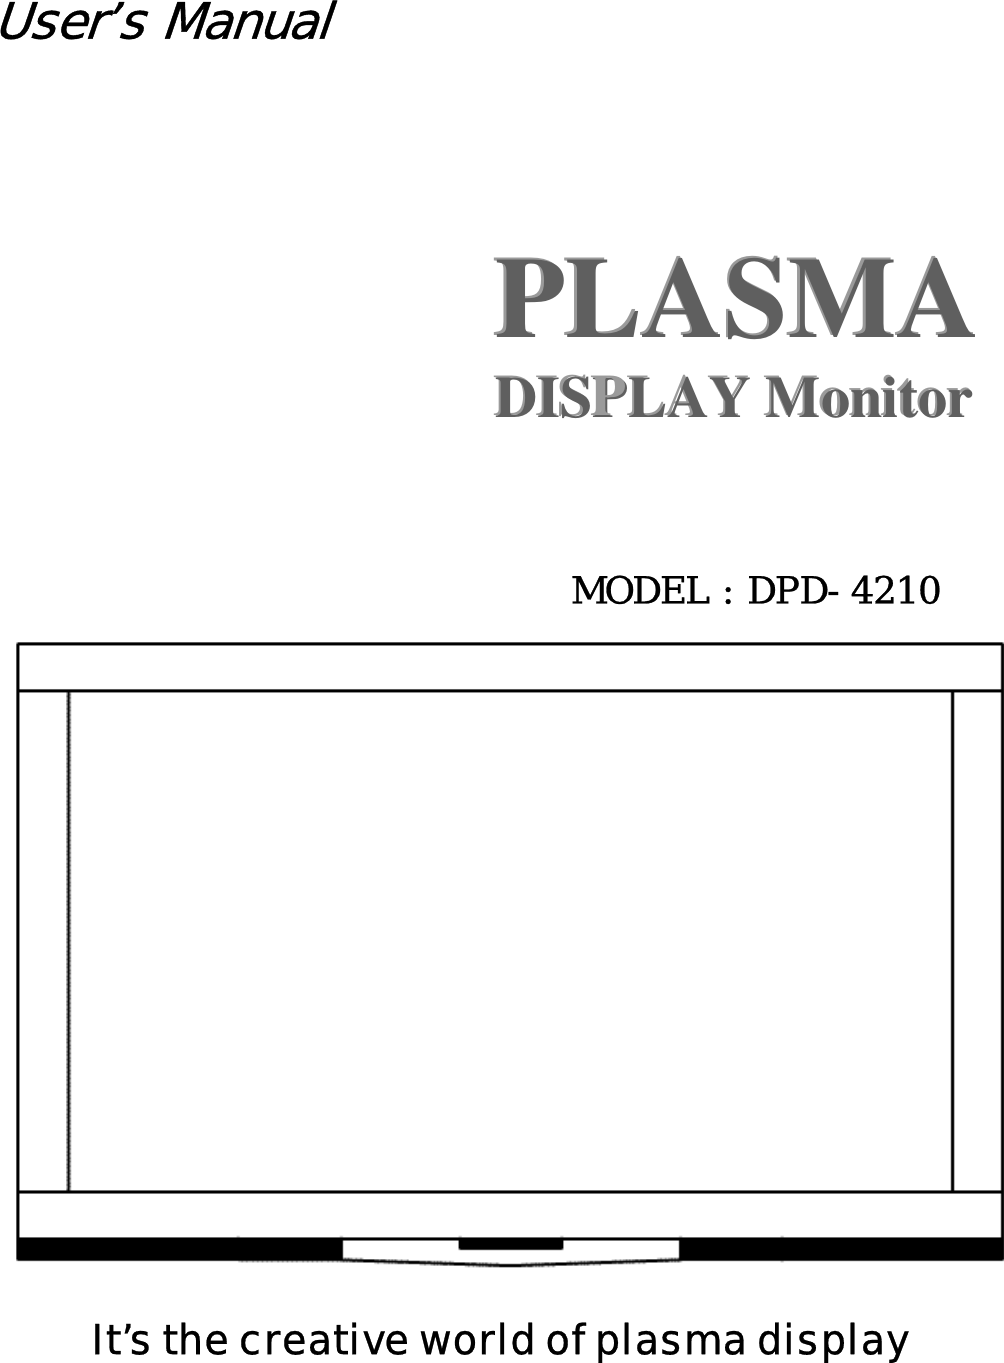 User’s Manual           PLASMA PPLLAASSMMAA         DISPPLAY Monitor               DDIISSPLLAAYY  MMoonniittoorr      MODEL : DPD-4210   It’s the creative world of plasma display 